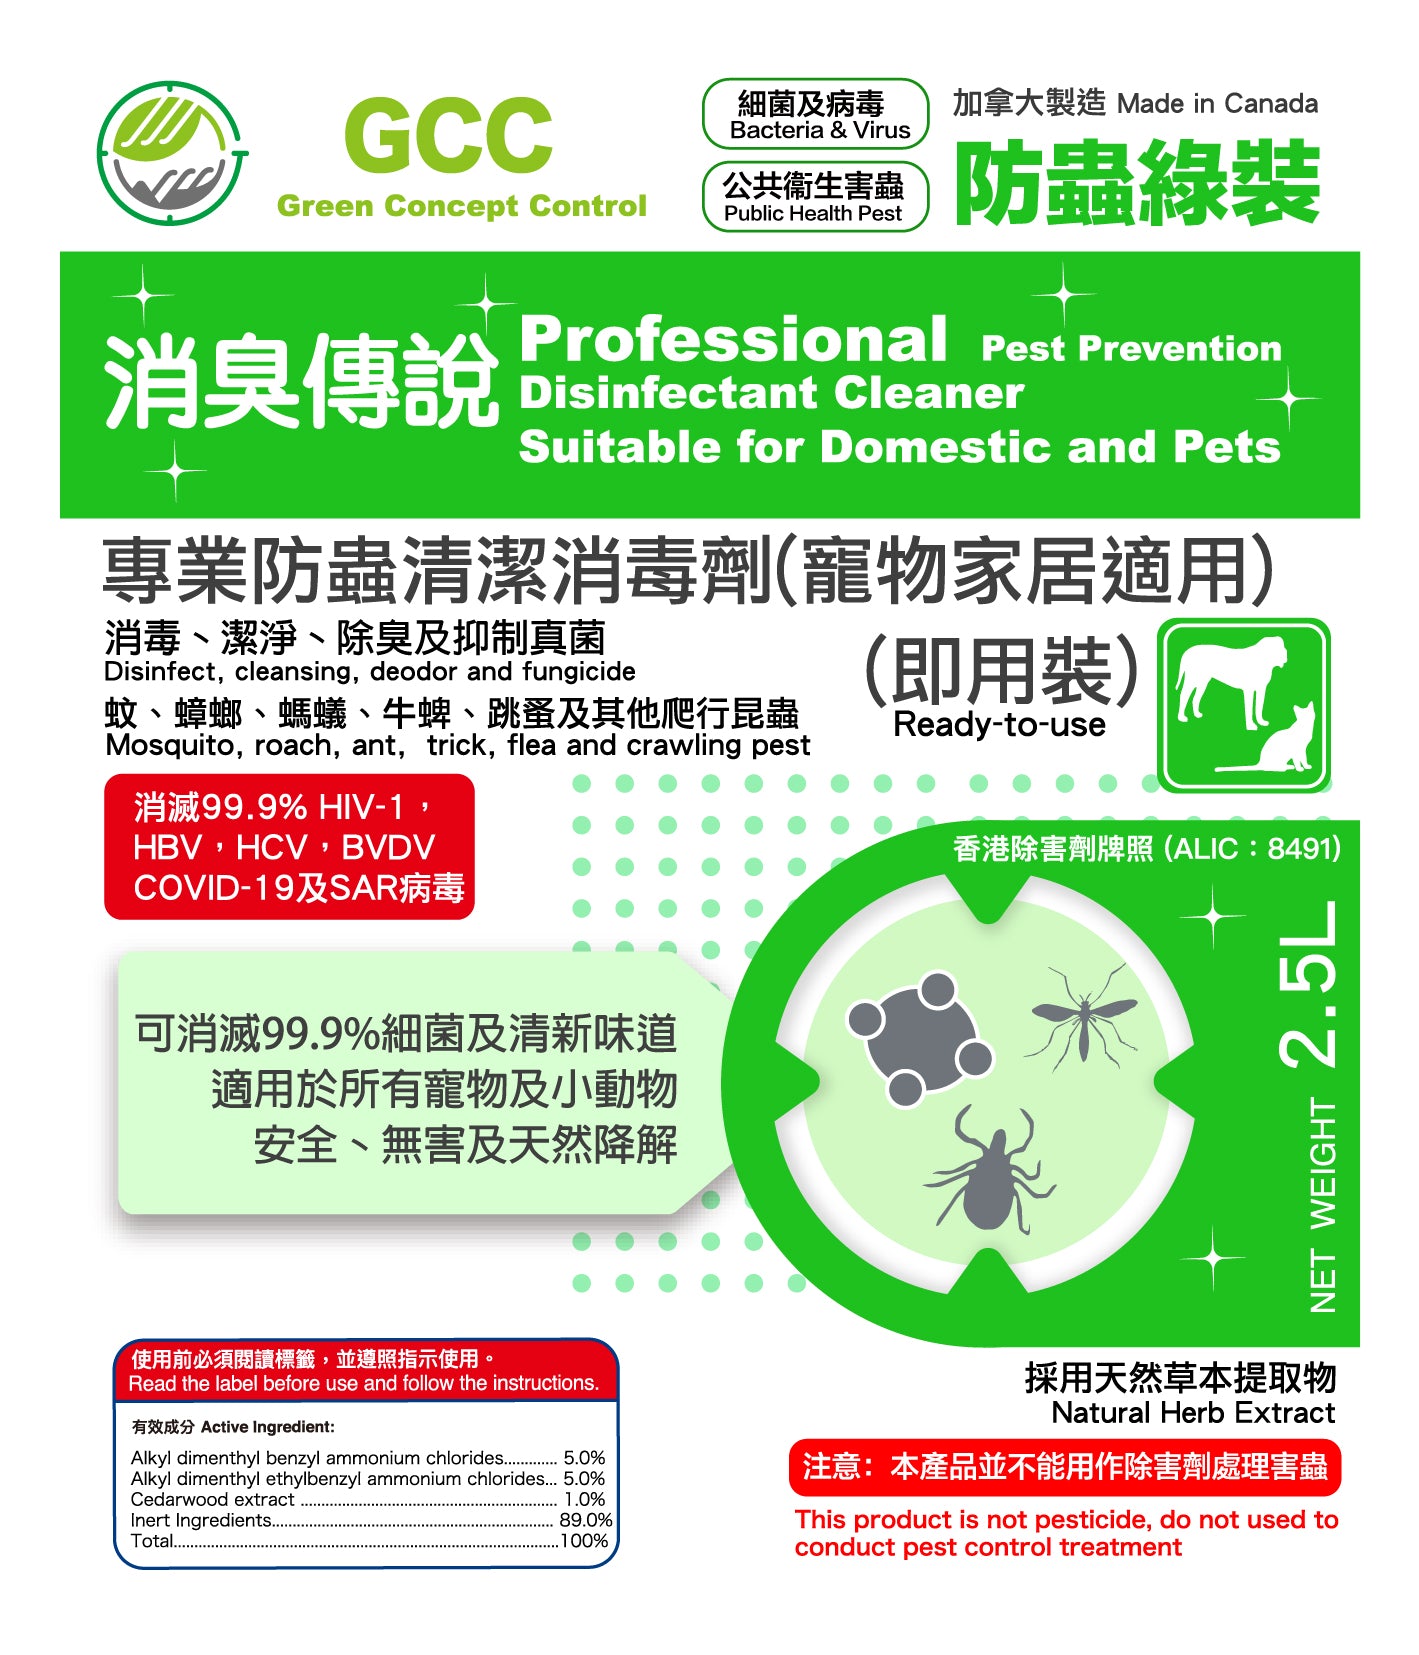 GCC 專業清潔消毒劑(寵物家居適用) 防蟲綠裝 2.5L - GCC